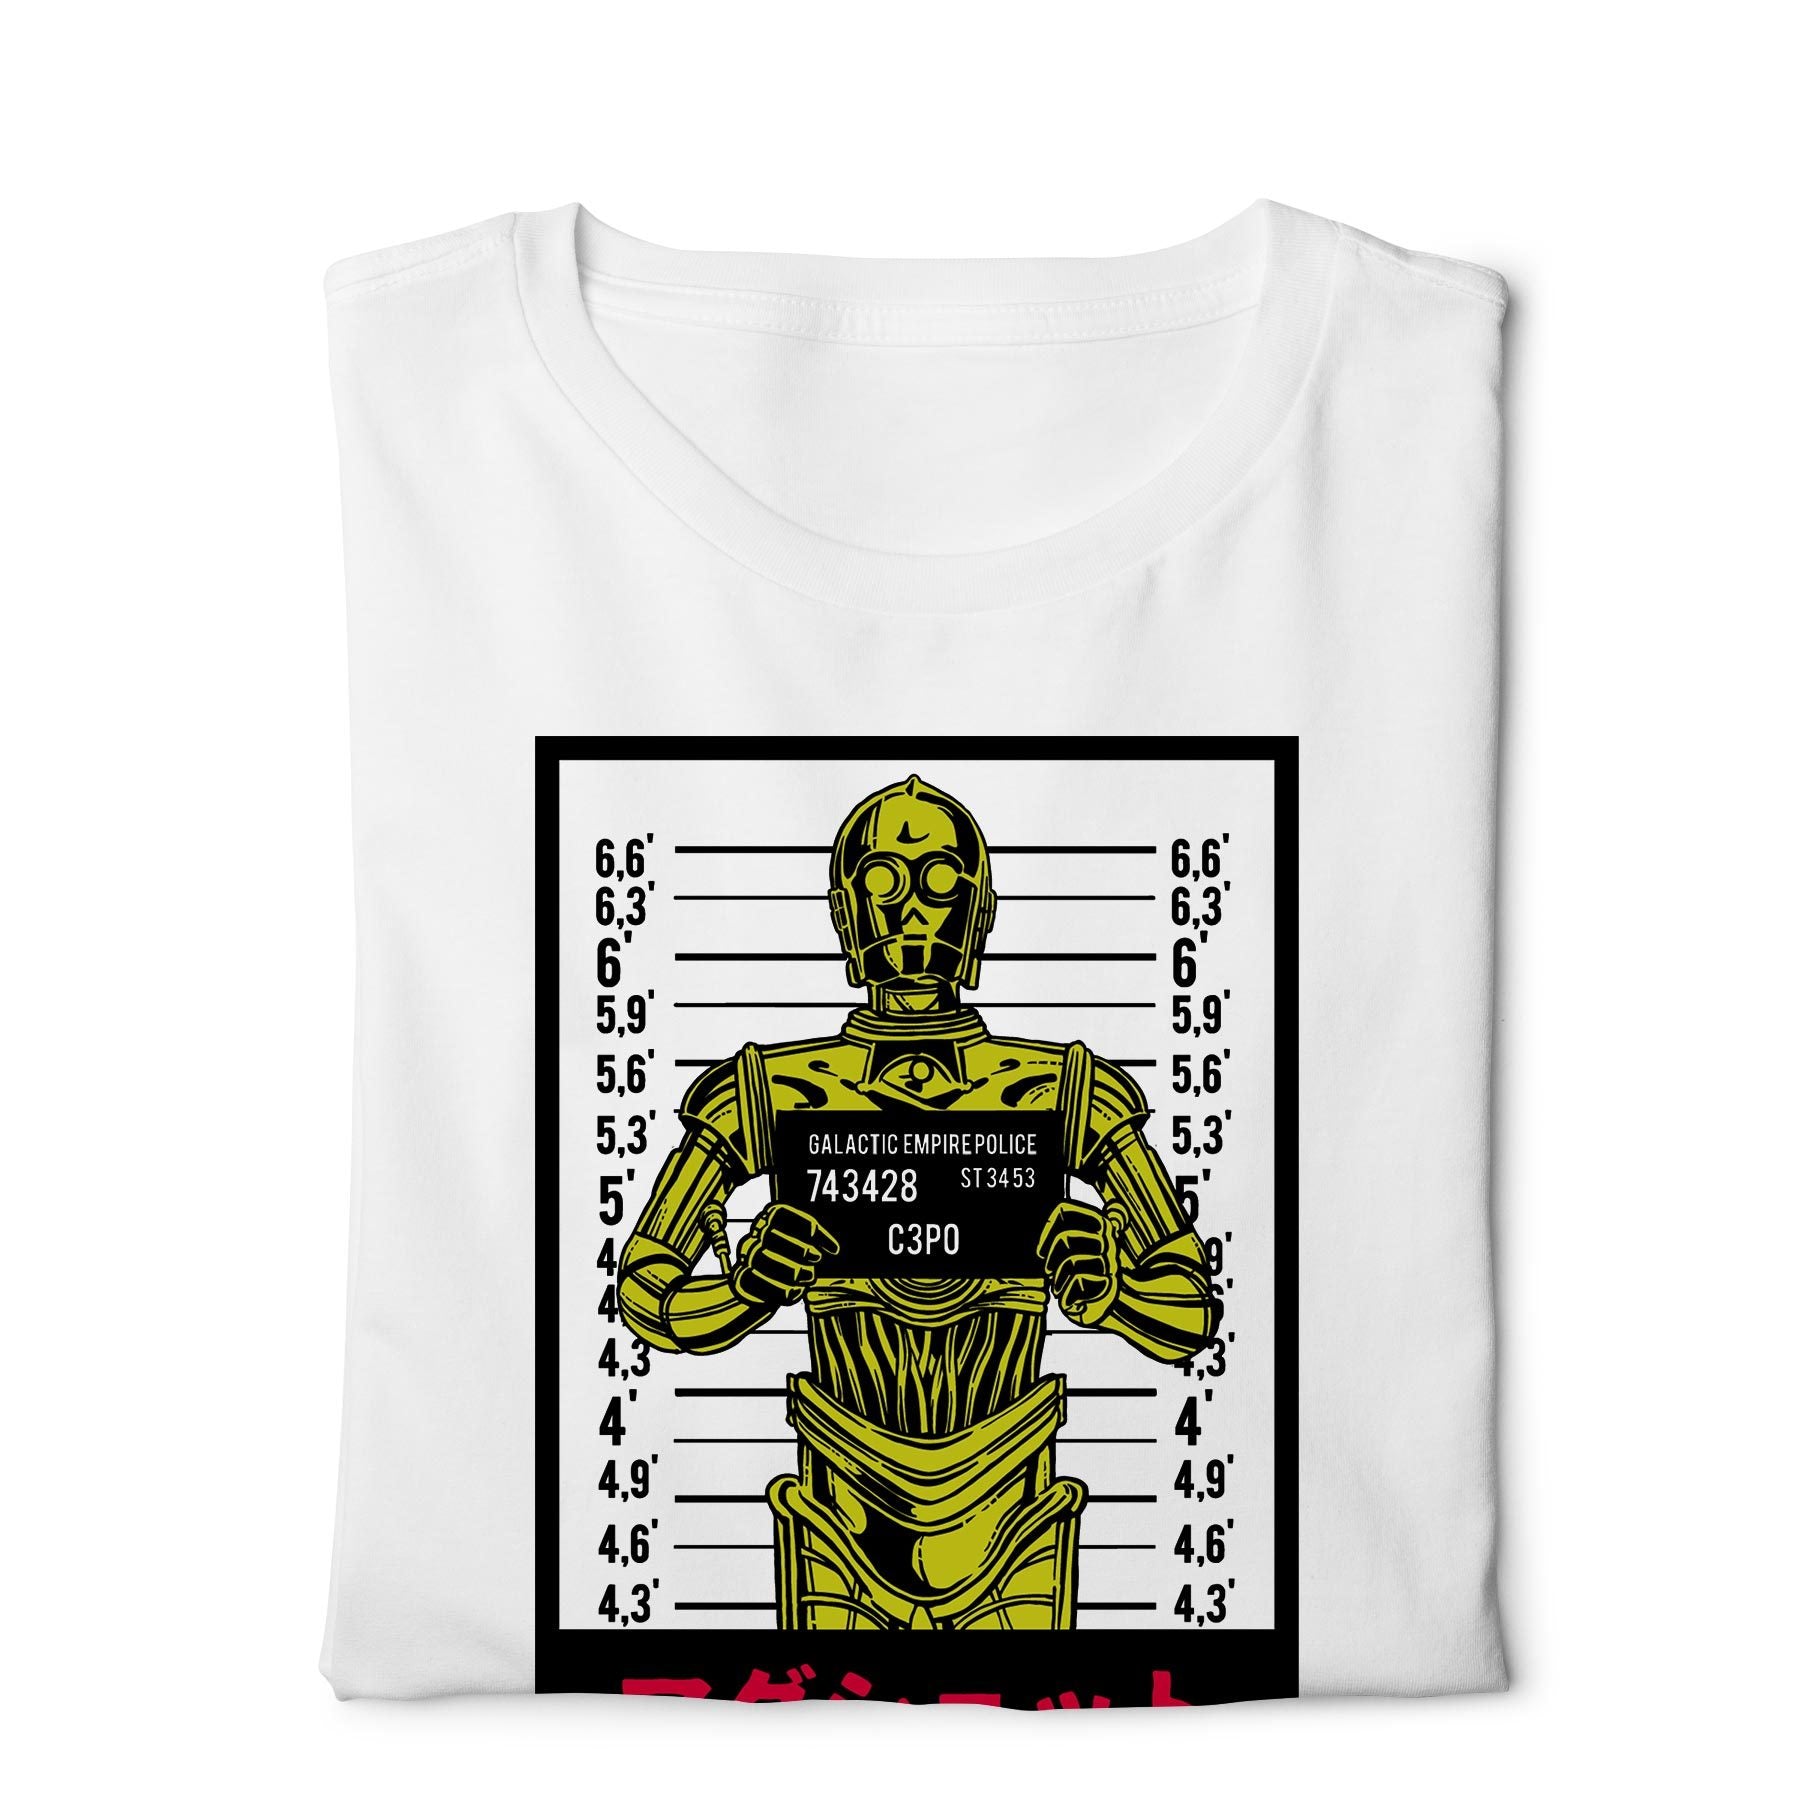 Star wars 3PO Mugshot - Digital Graphics Basic T-shirt White - Ravin 